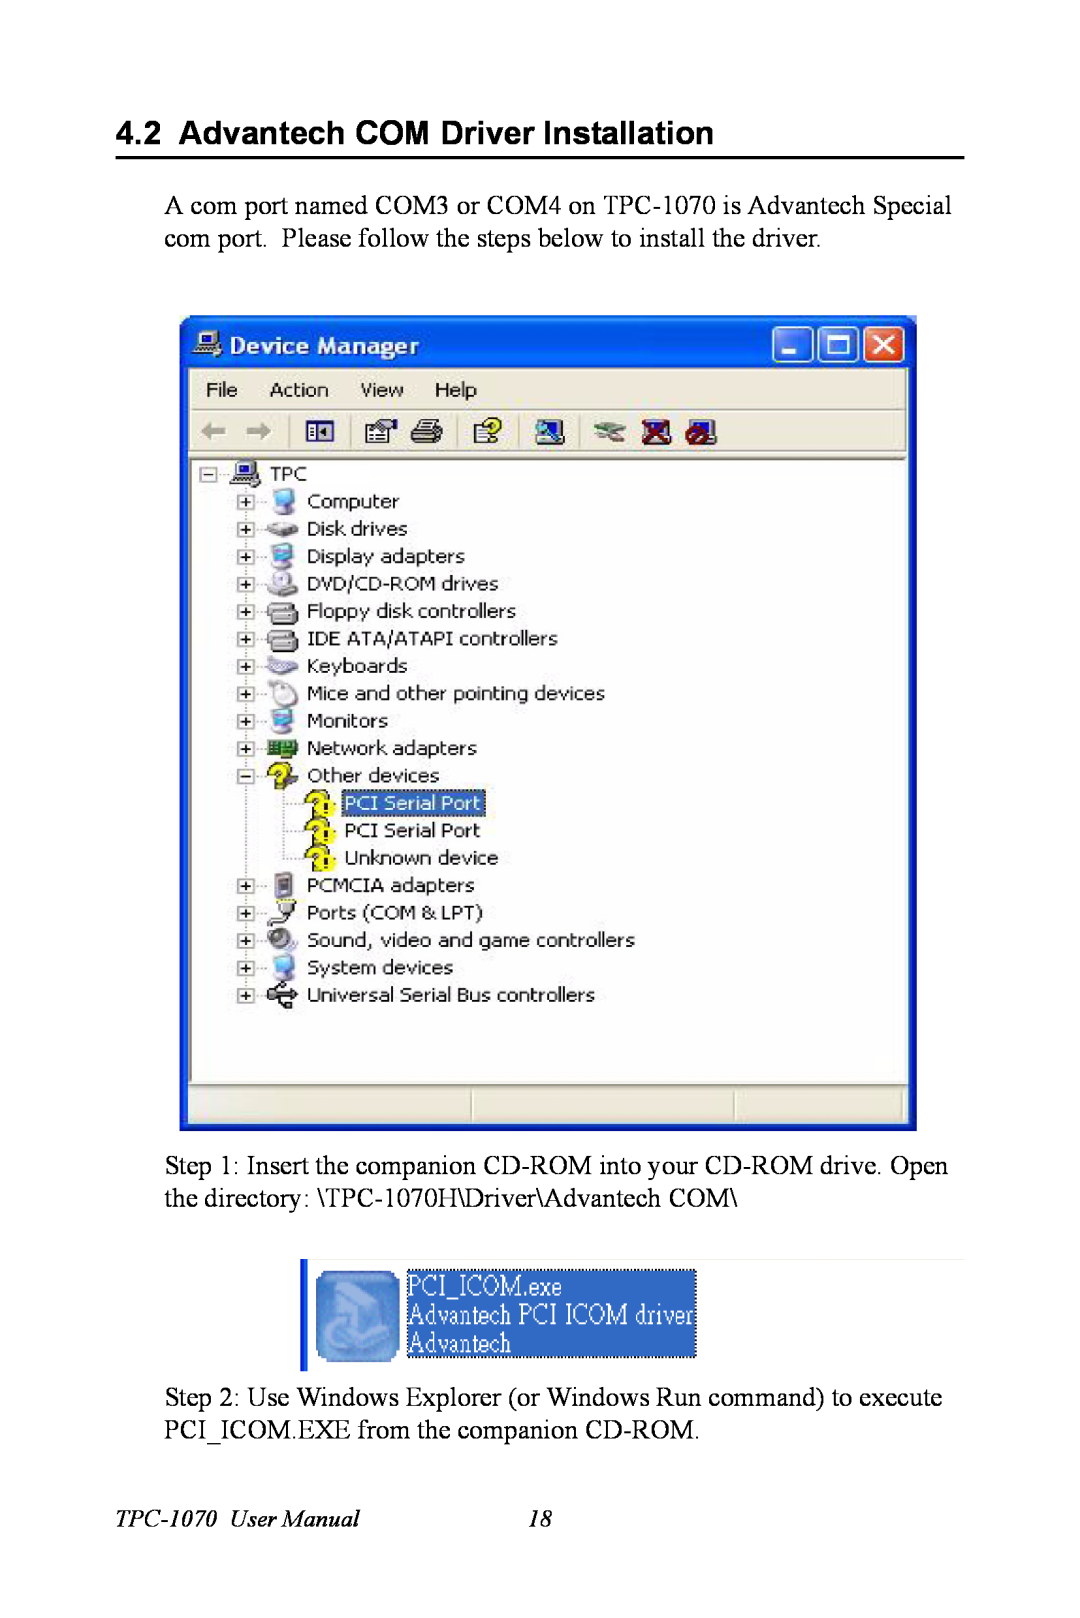 Intel TPC-1070 user manual Advantech COM Driver Installation, Insert the companion CD-ROM into your CD-ROM drive. Open 